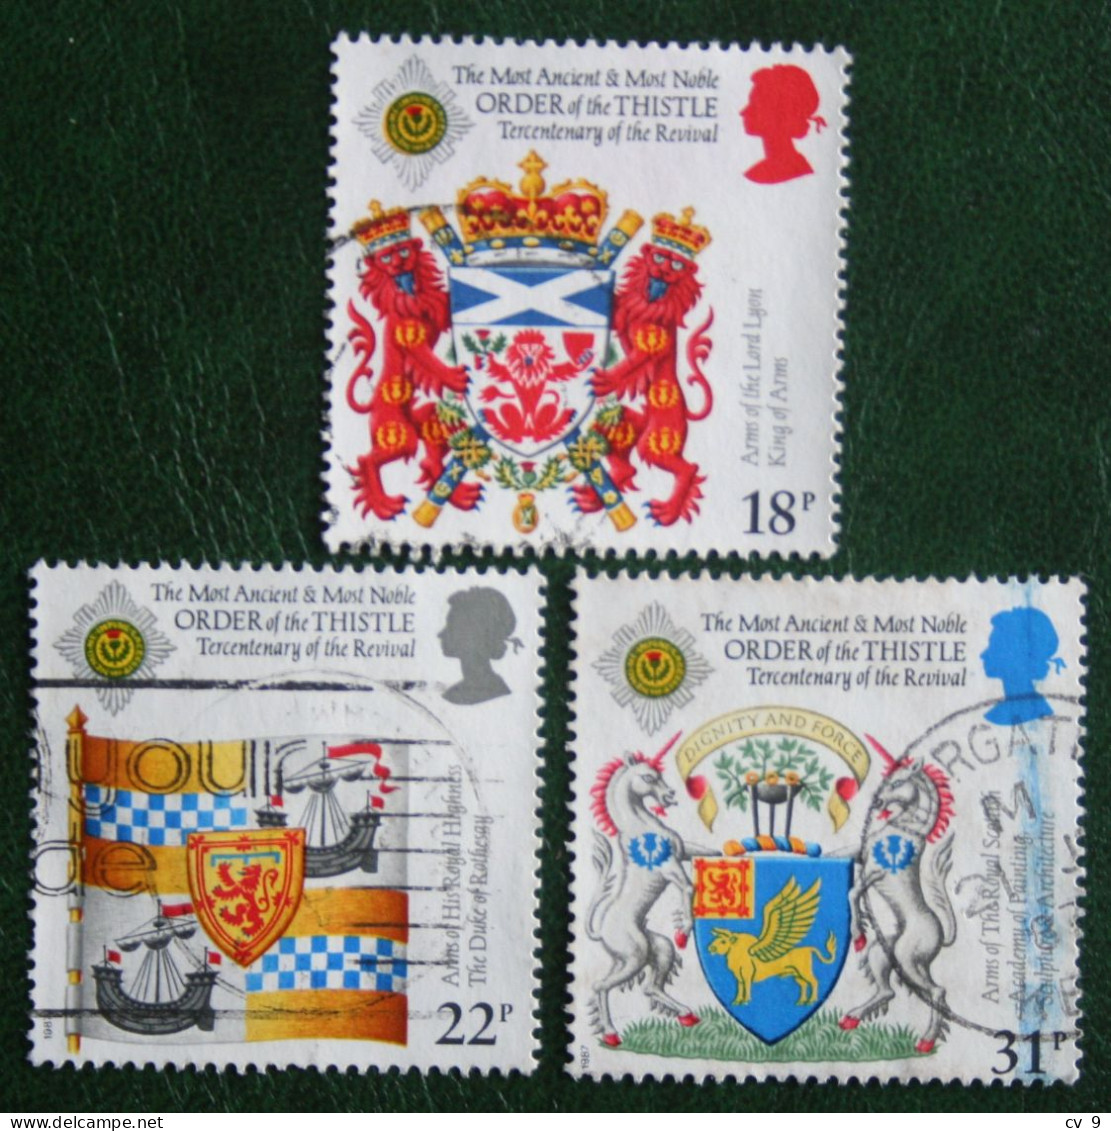 ORDER OF THE THISTLE ANNIVERSARY (Mi 1113-1115) 1987 Used Gebruikt Oblitere ENGLAND GRANDE-BRETAGNE GB GREAT BRITAIN - Used Stamps